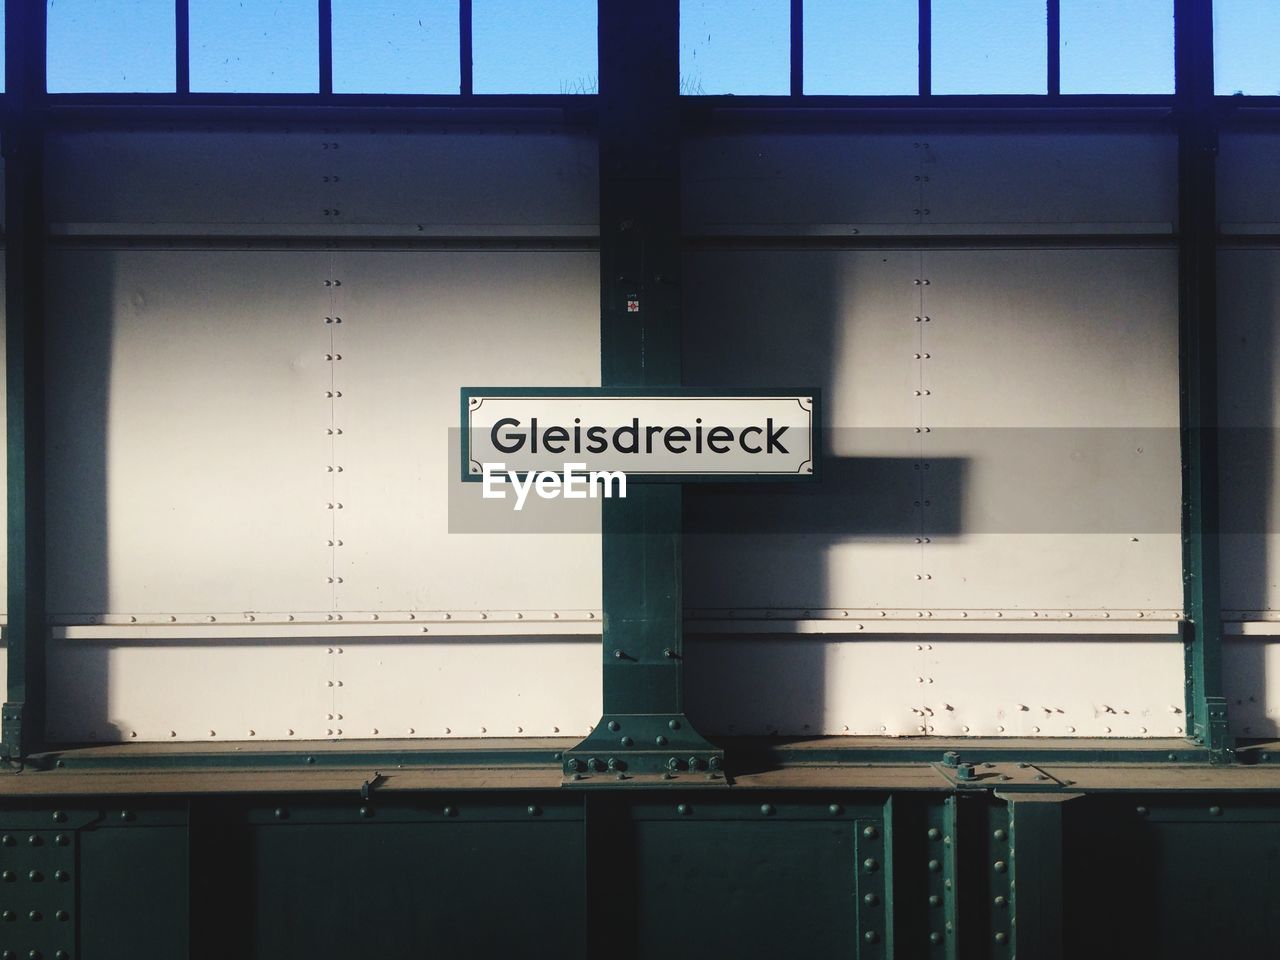 Gleisdreieck subway station sign